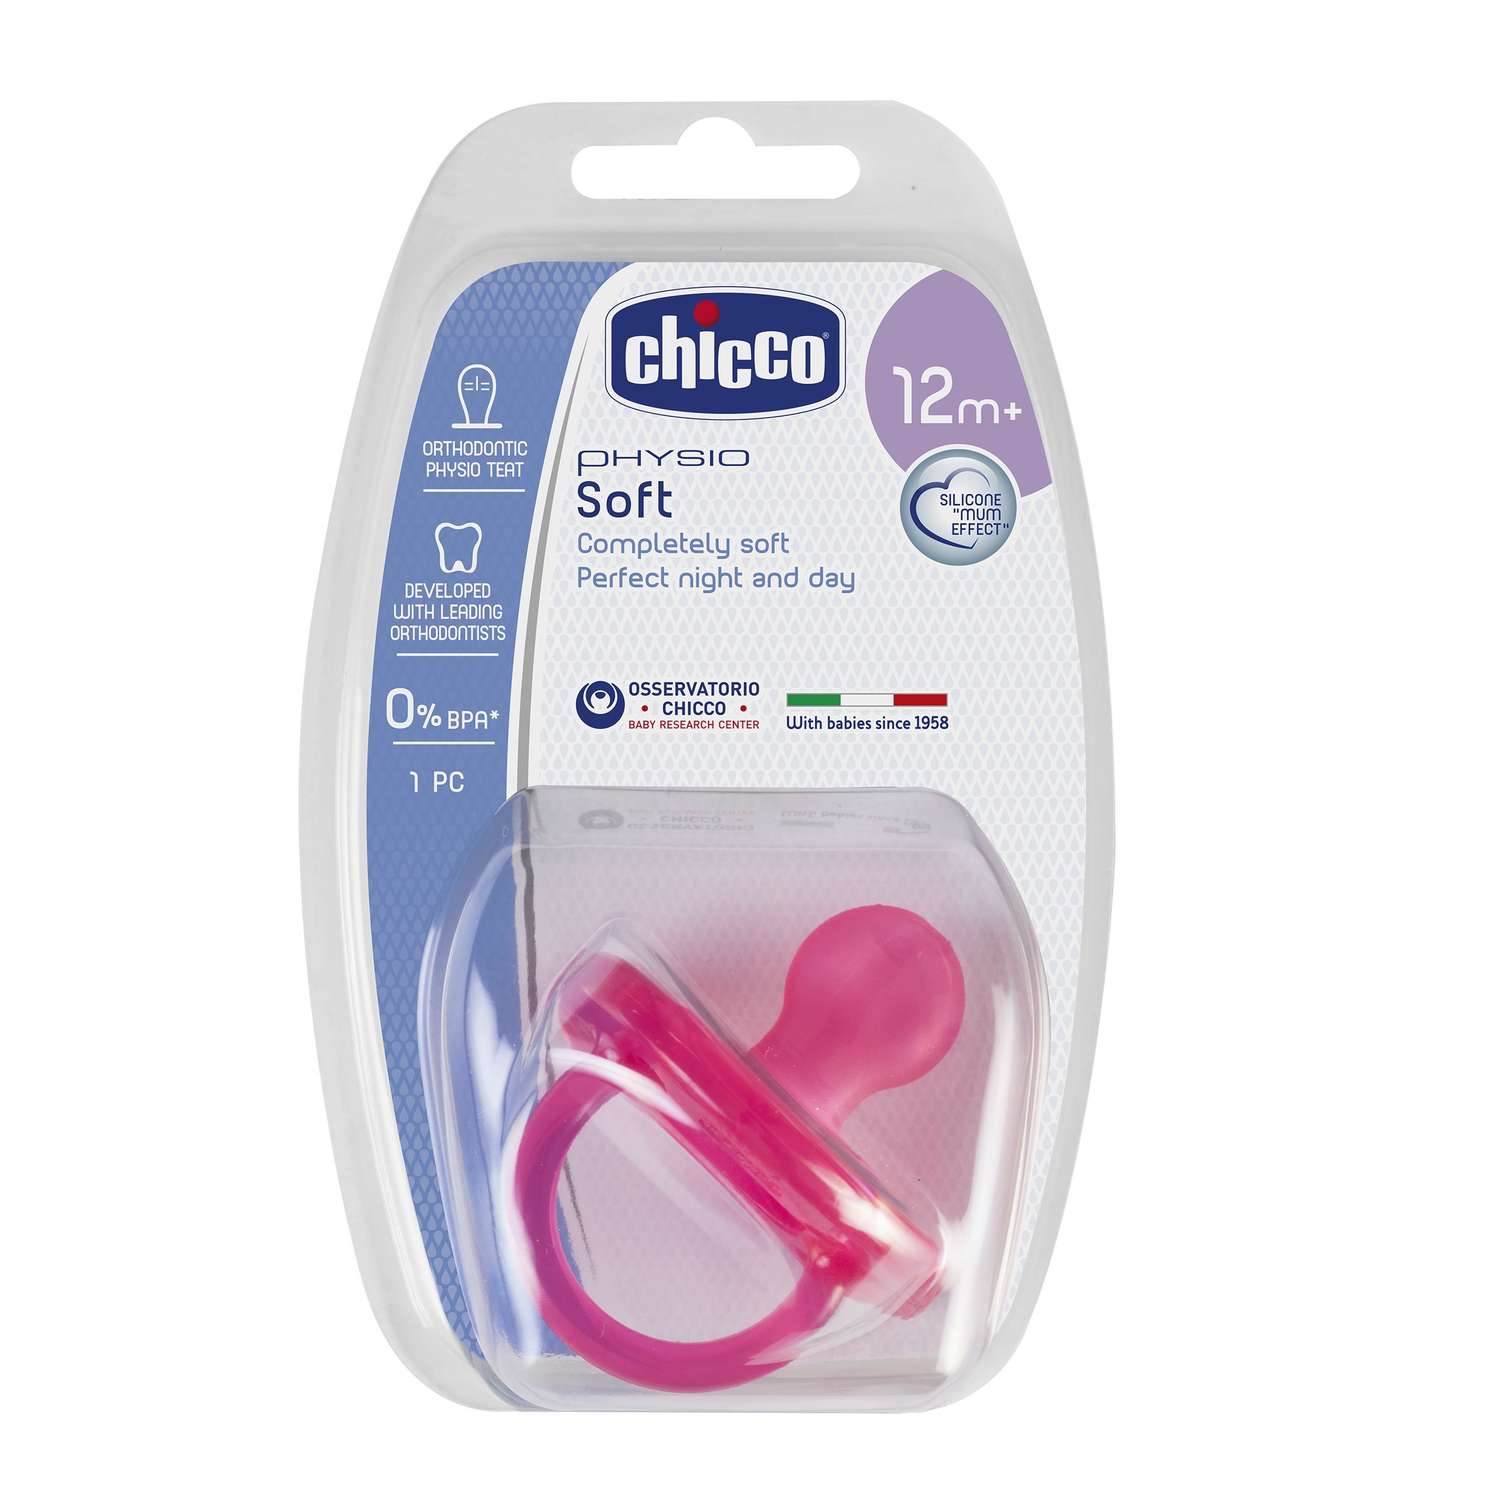 Пустышка Chicco Physio Soft с 12месяцев Розовая - фото 2